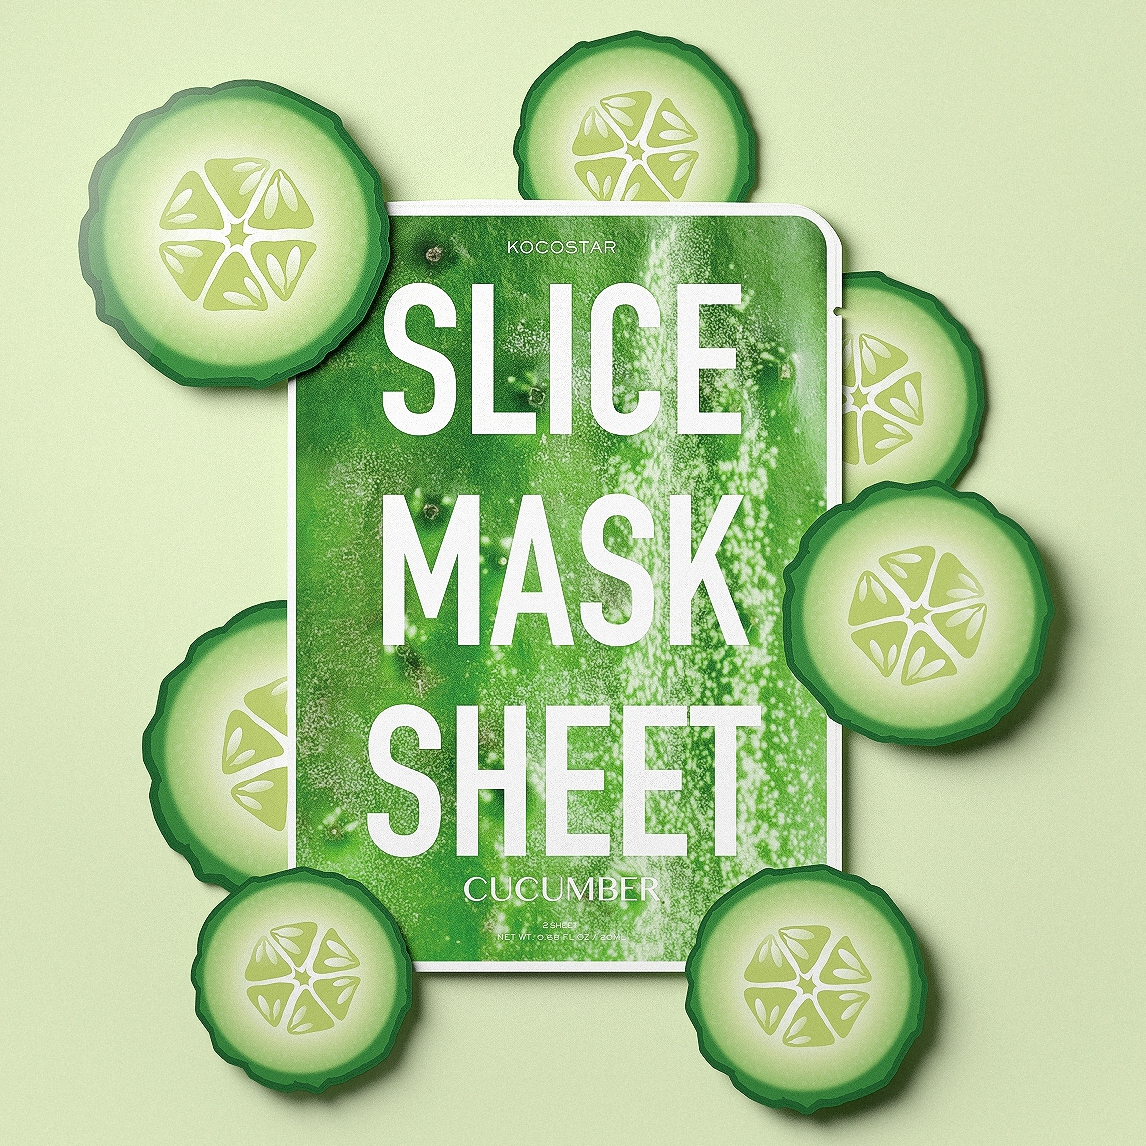 kocostar Cucumber Slice Sheet Mask